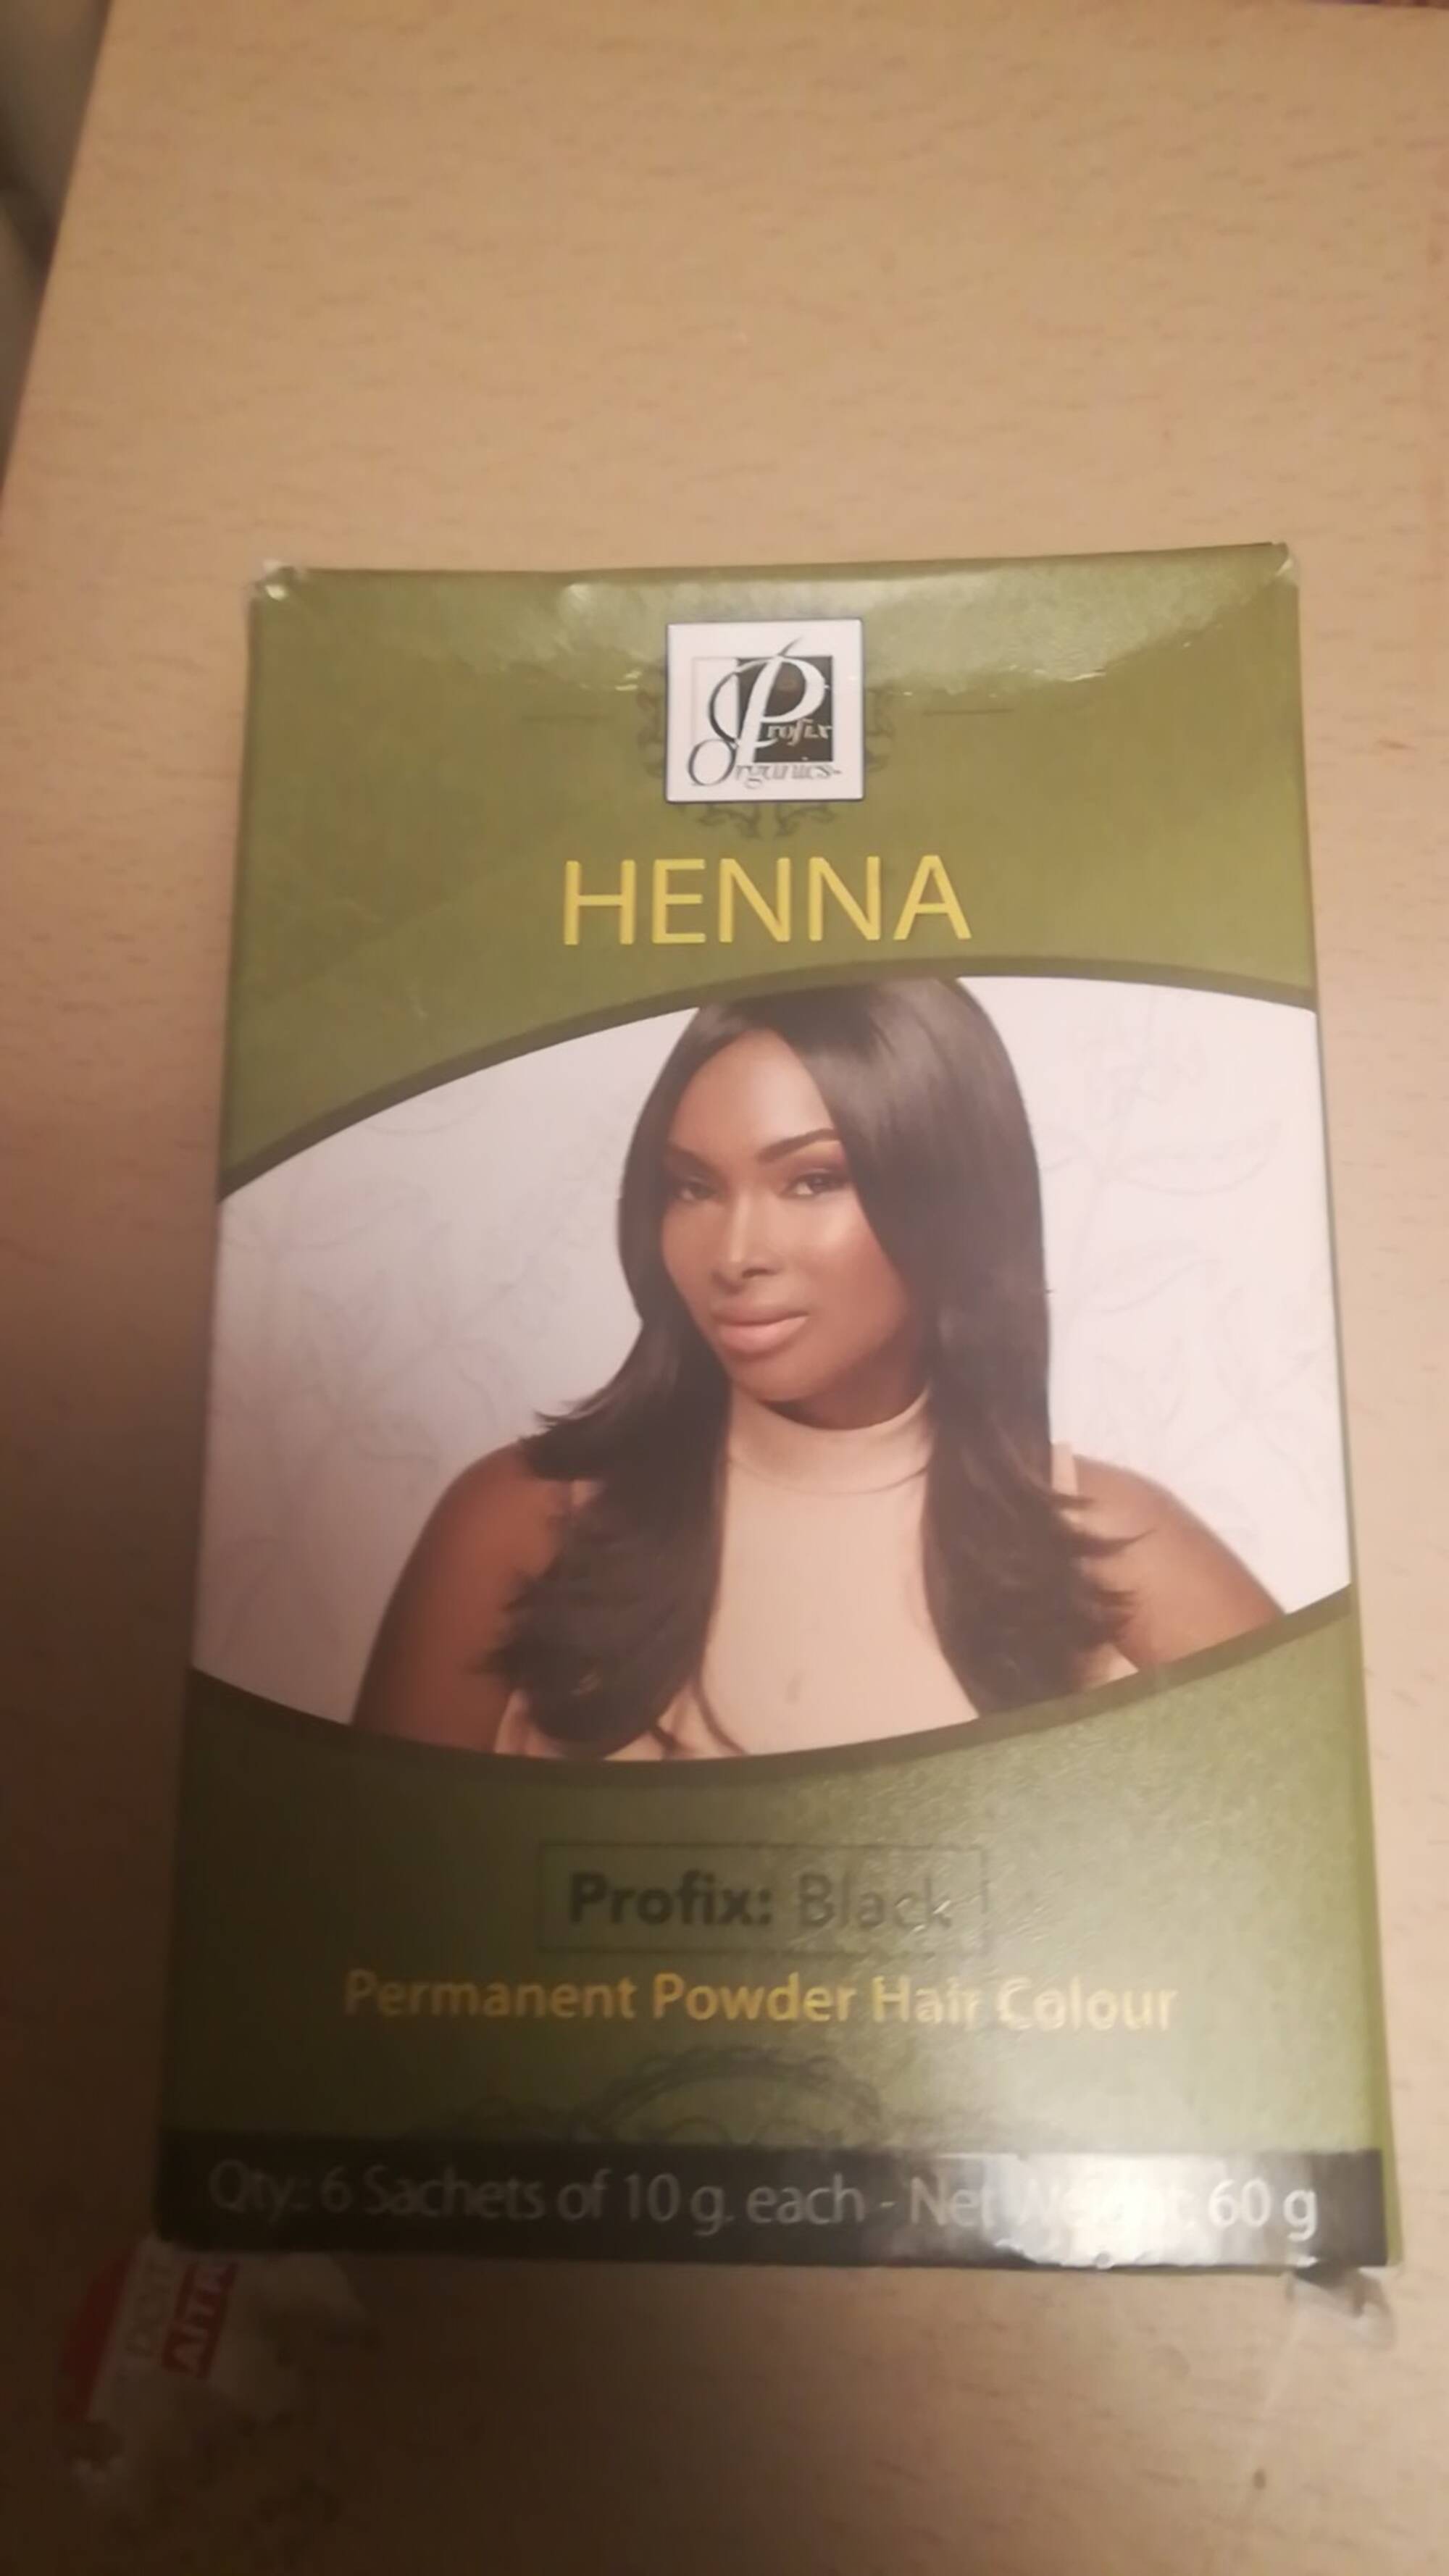 PROFIX ORGANICS - Henna - Permanent powder hair colour profix : black